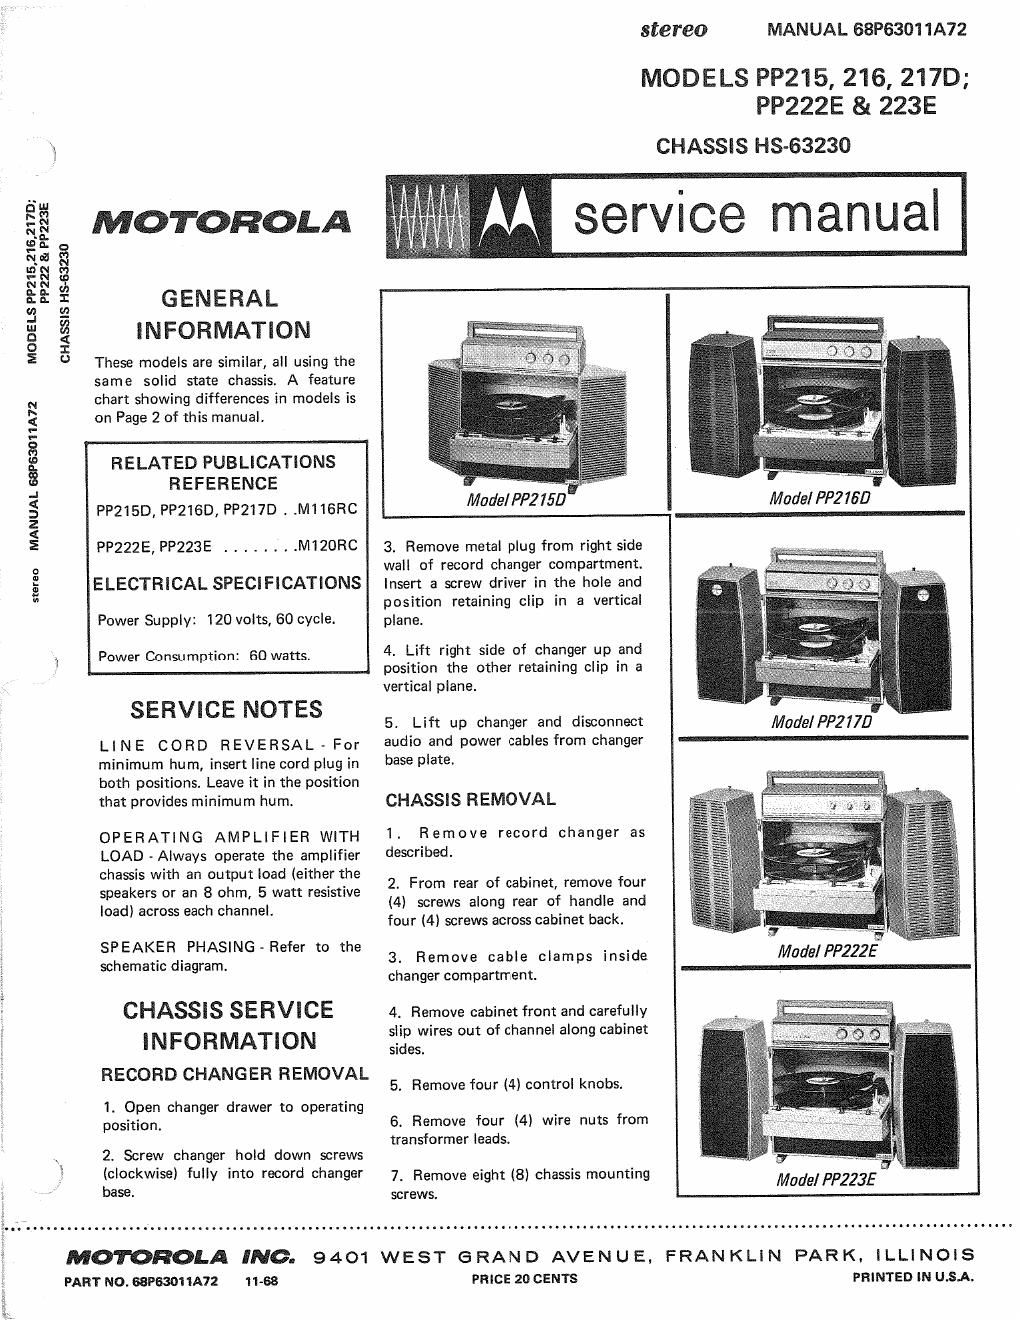 motorola pp 215 d service manual